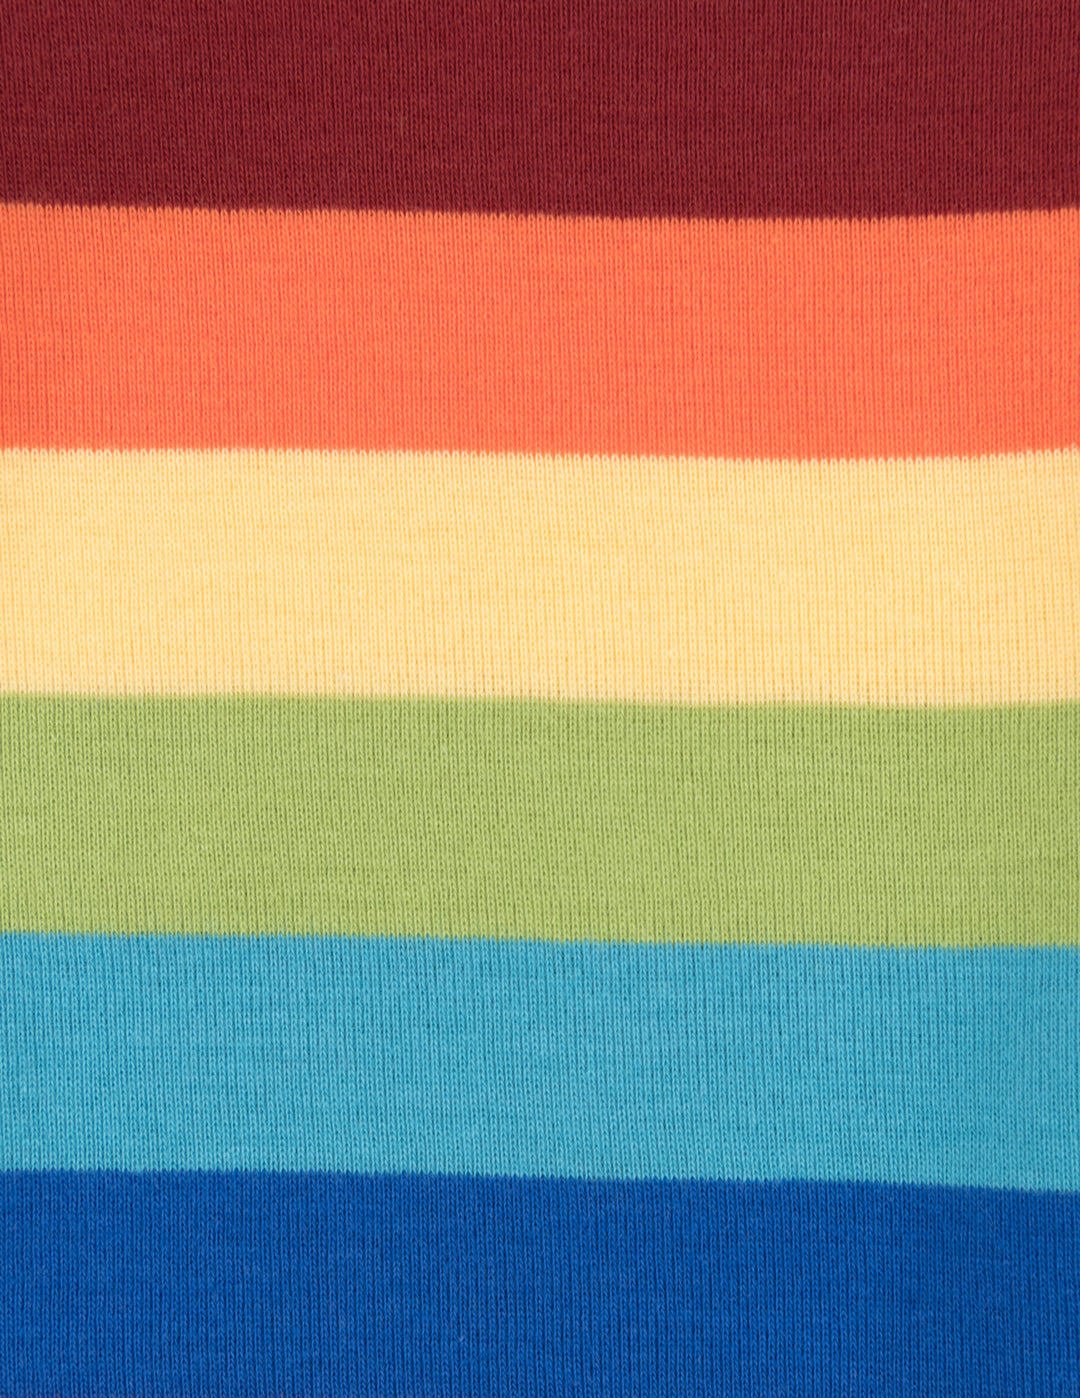 rainbow boy stripes shorts cotton kids pajamas